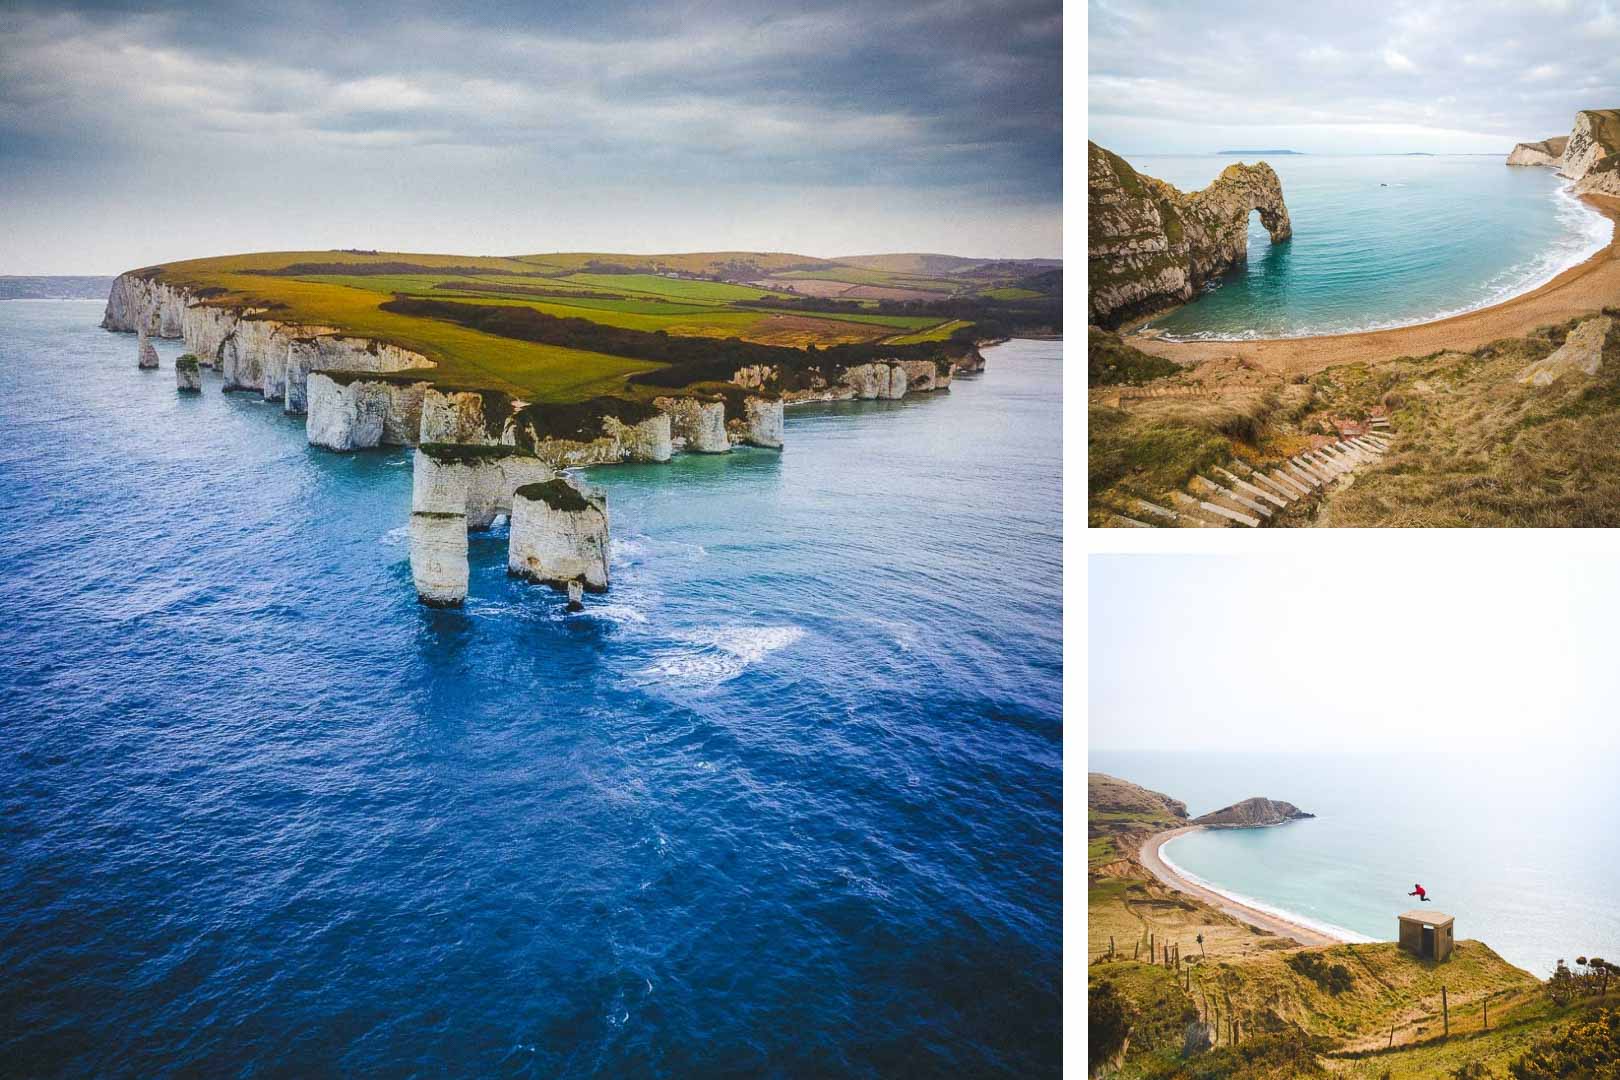 photos of the jurassic coast of england